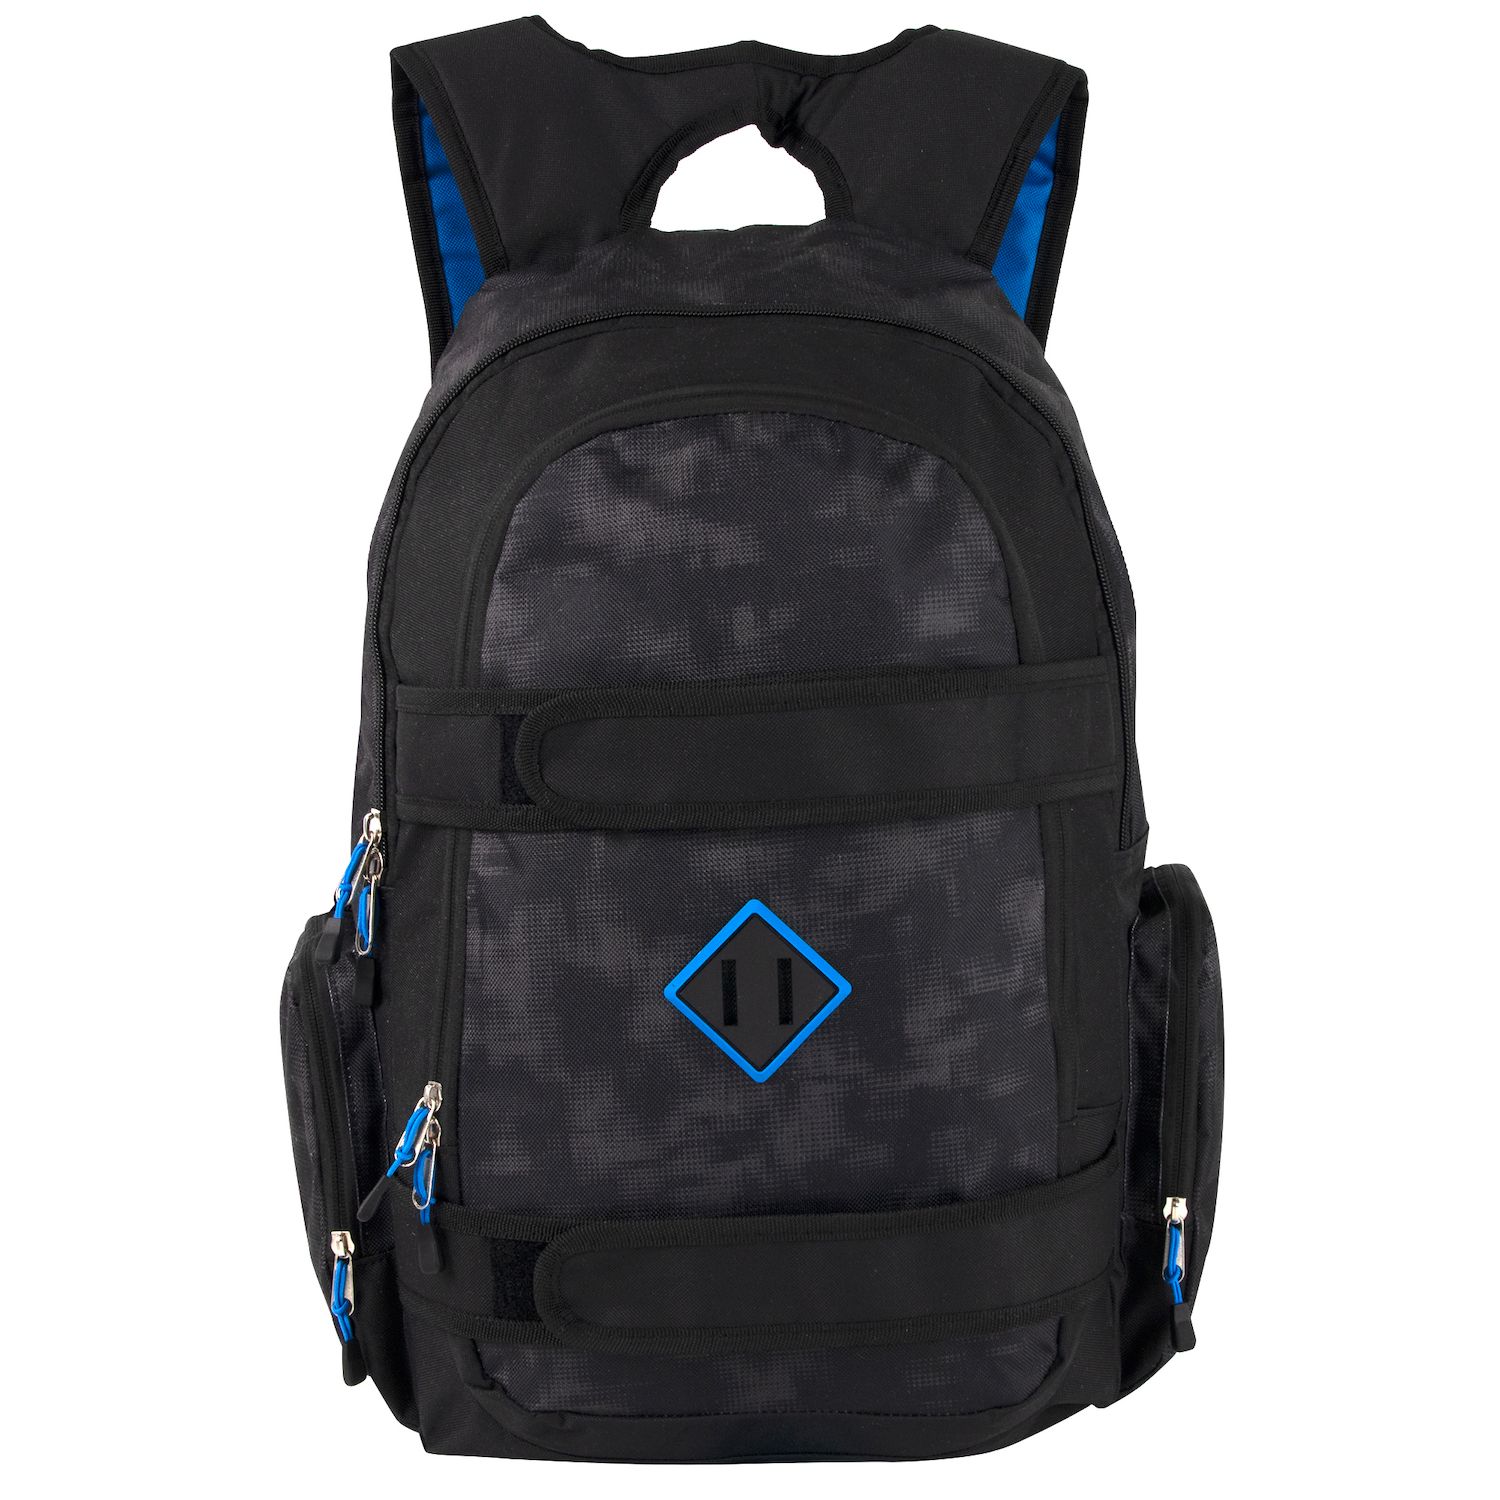 Minecraft Boy's Schoolbag Set, Black, One Size